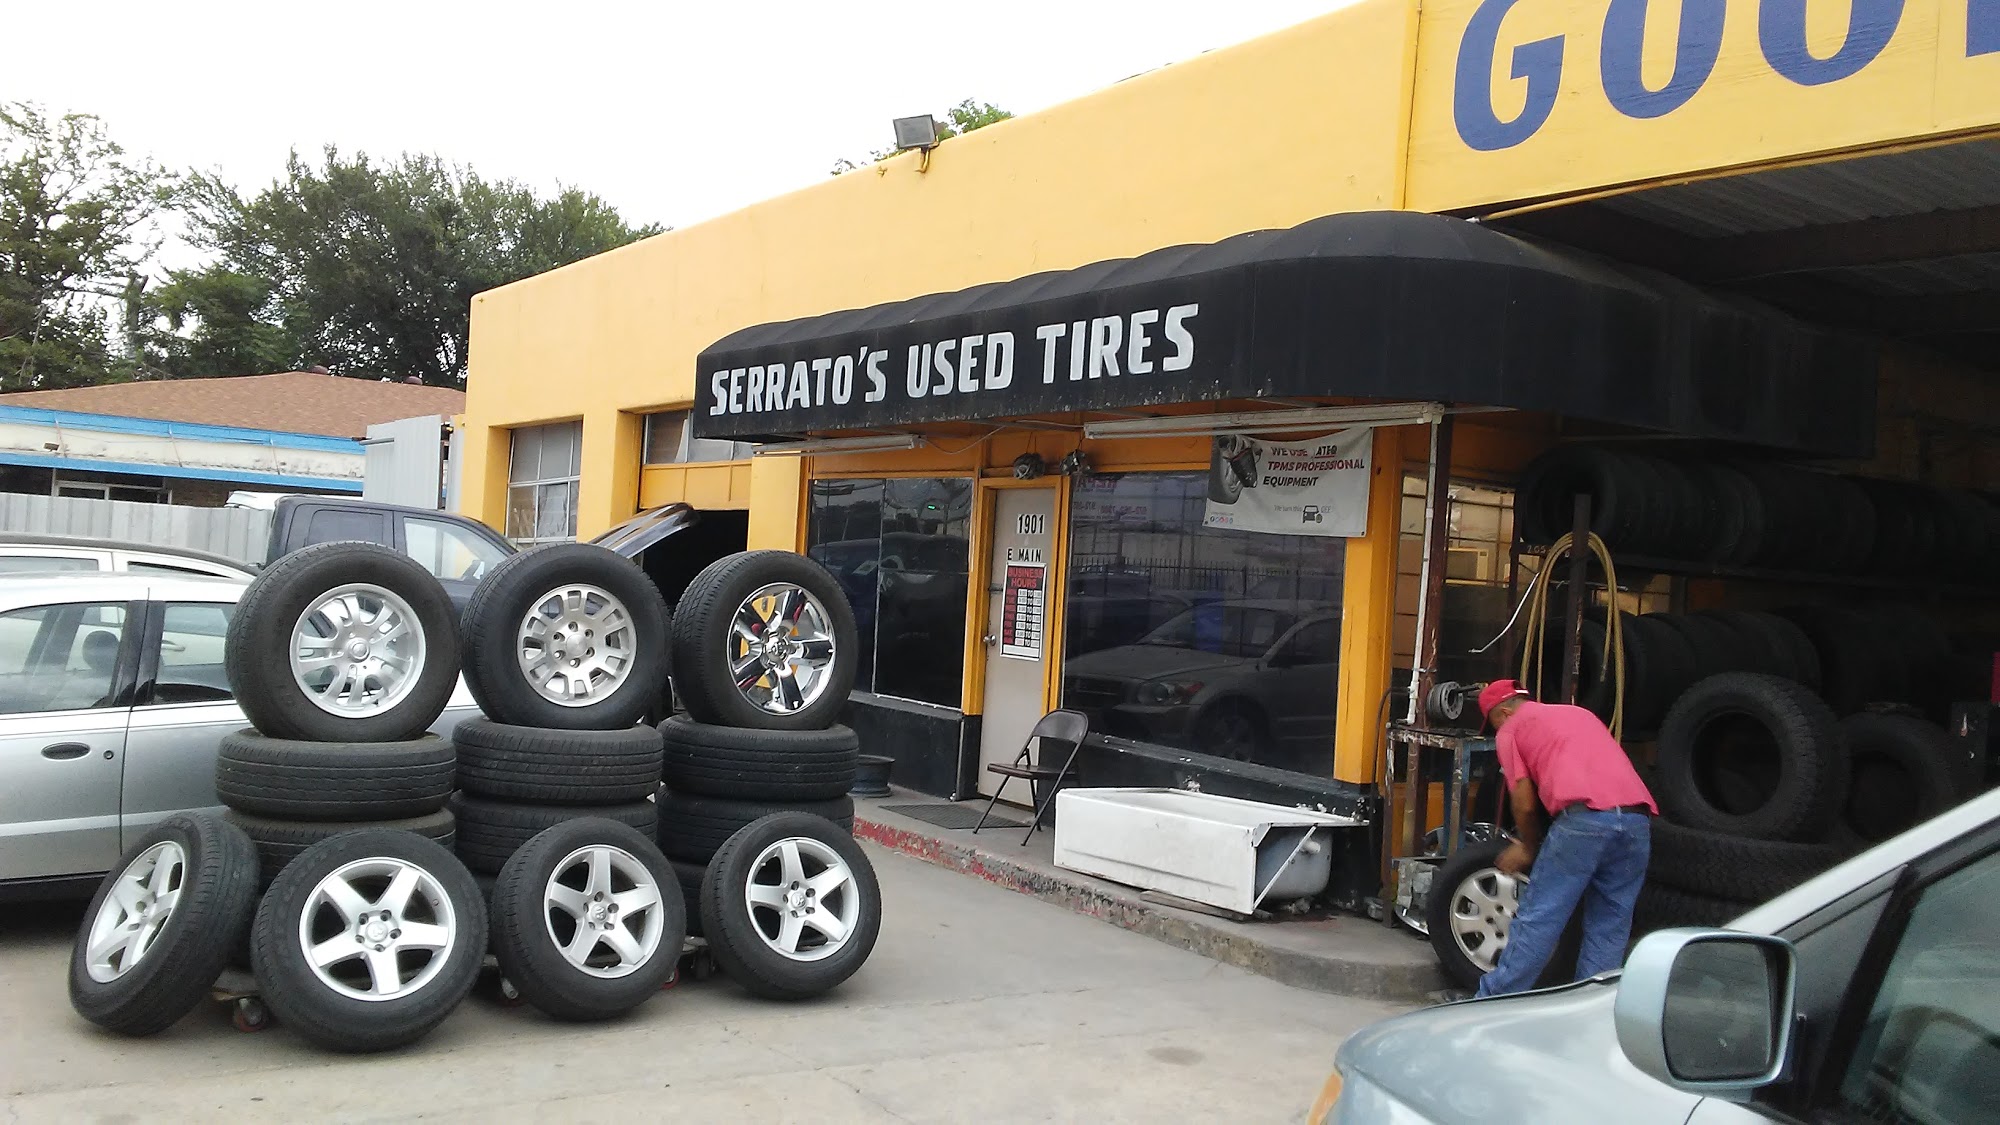 Serrato's Used Tires